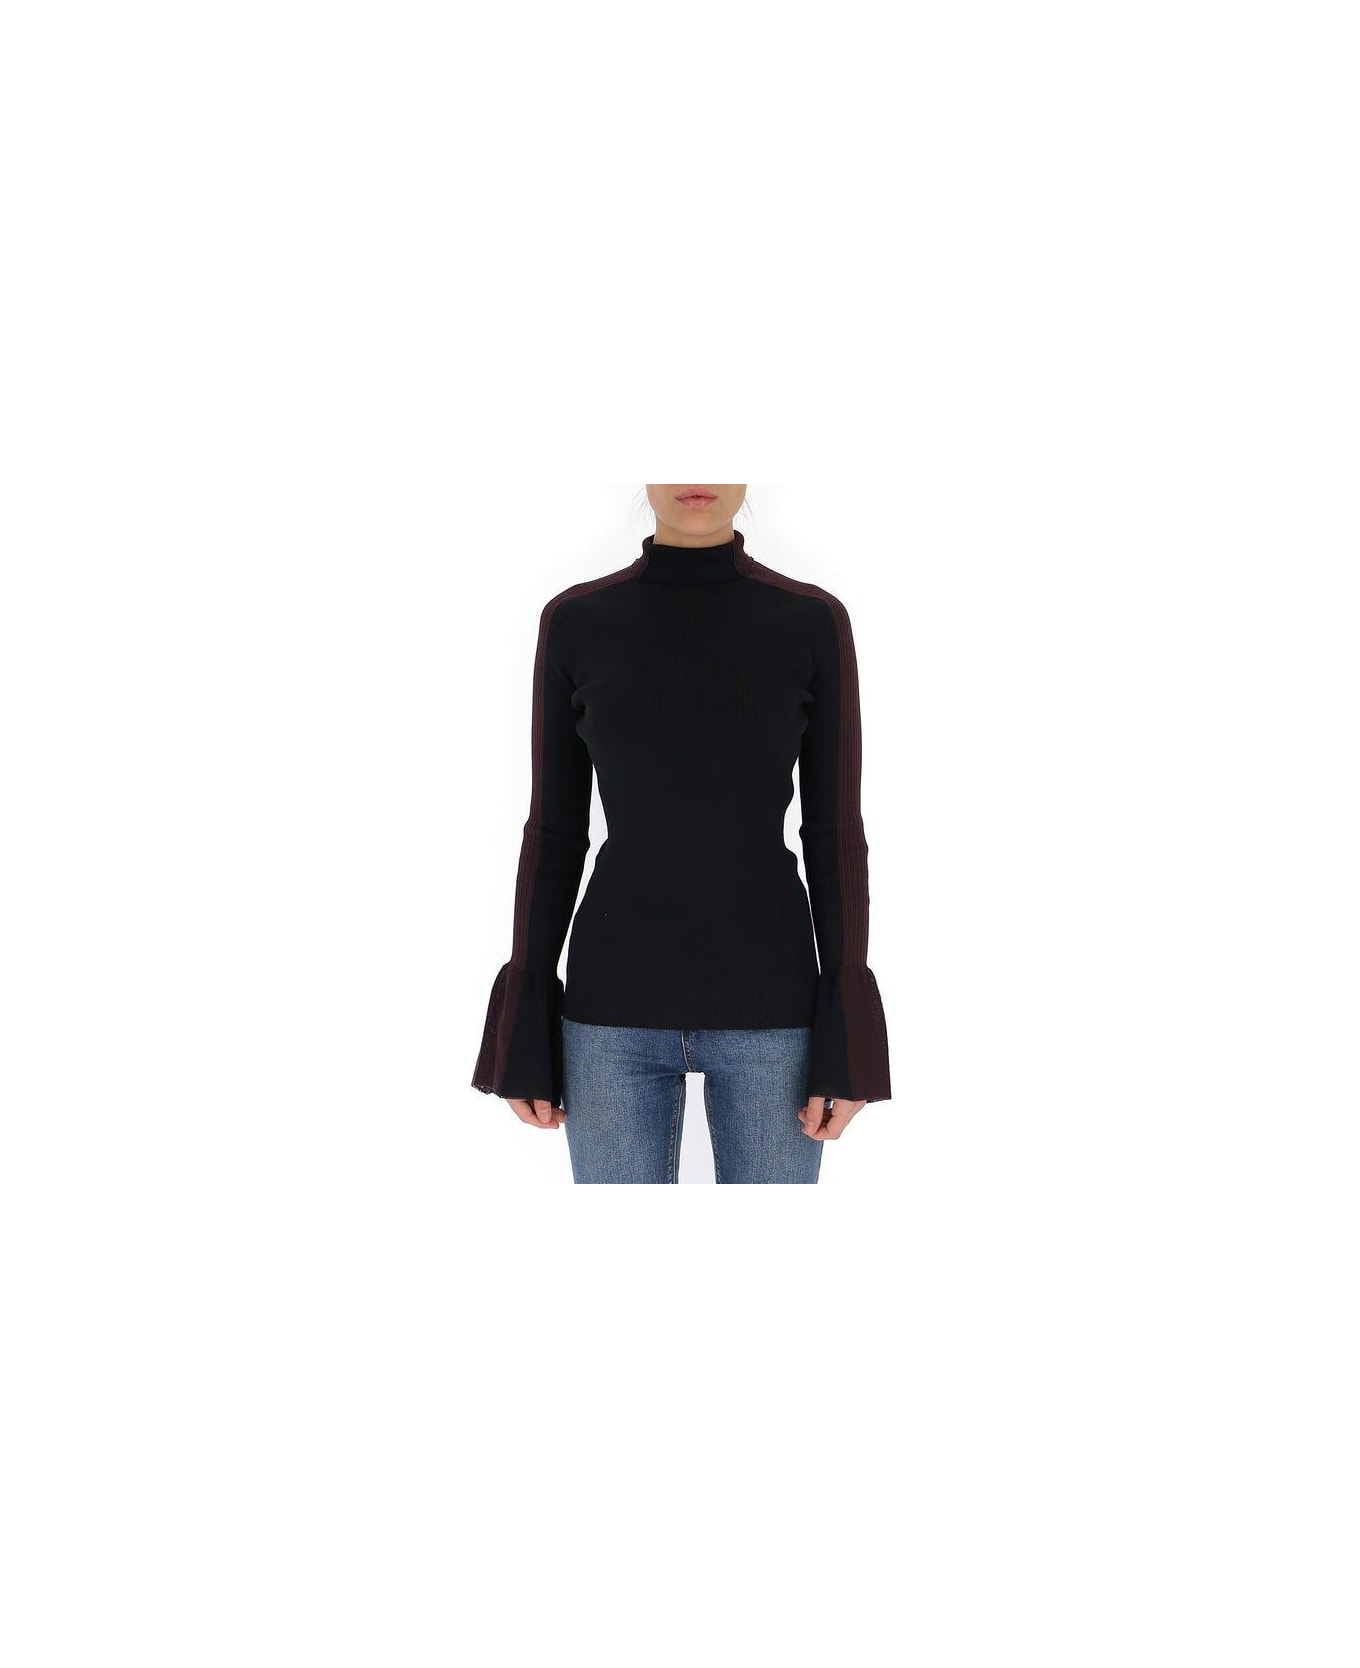 Moncler 1952 High Neck Contrast Trim Sweater - Black